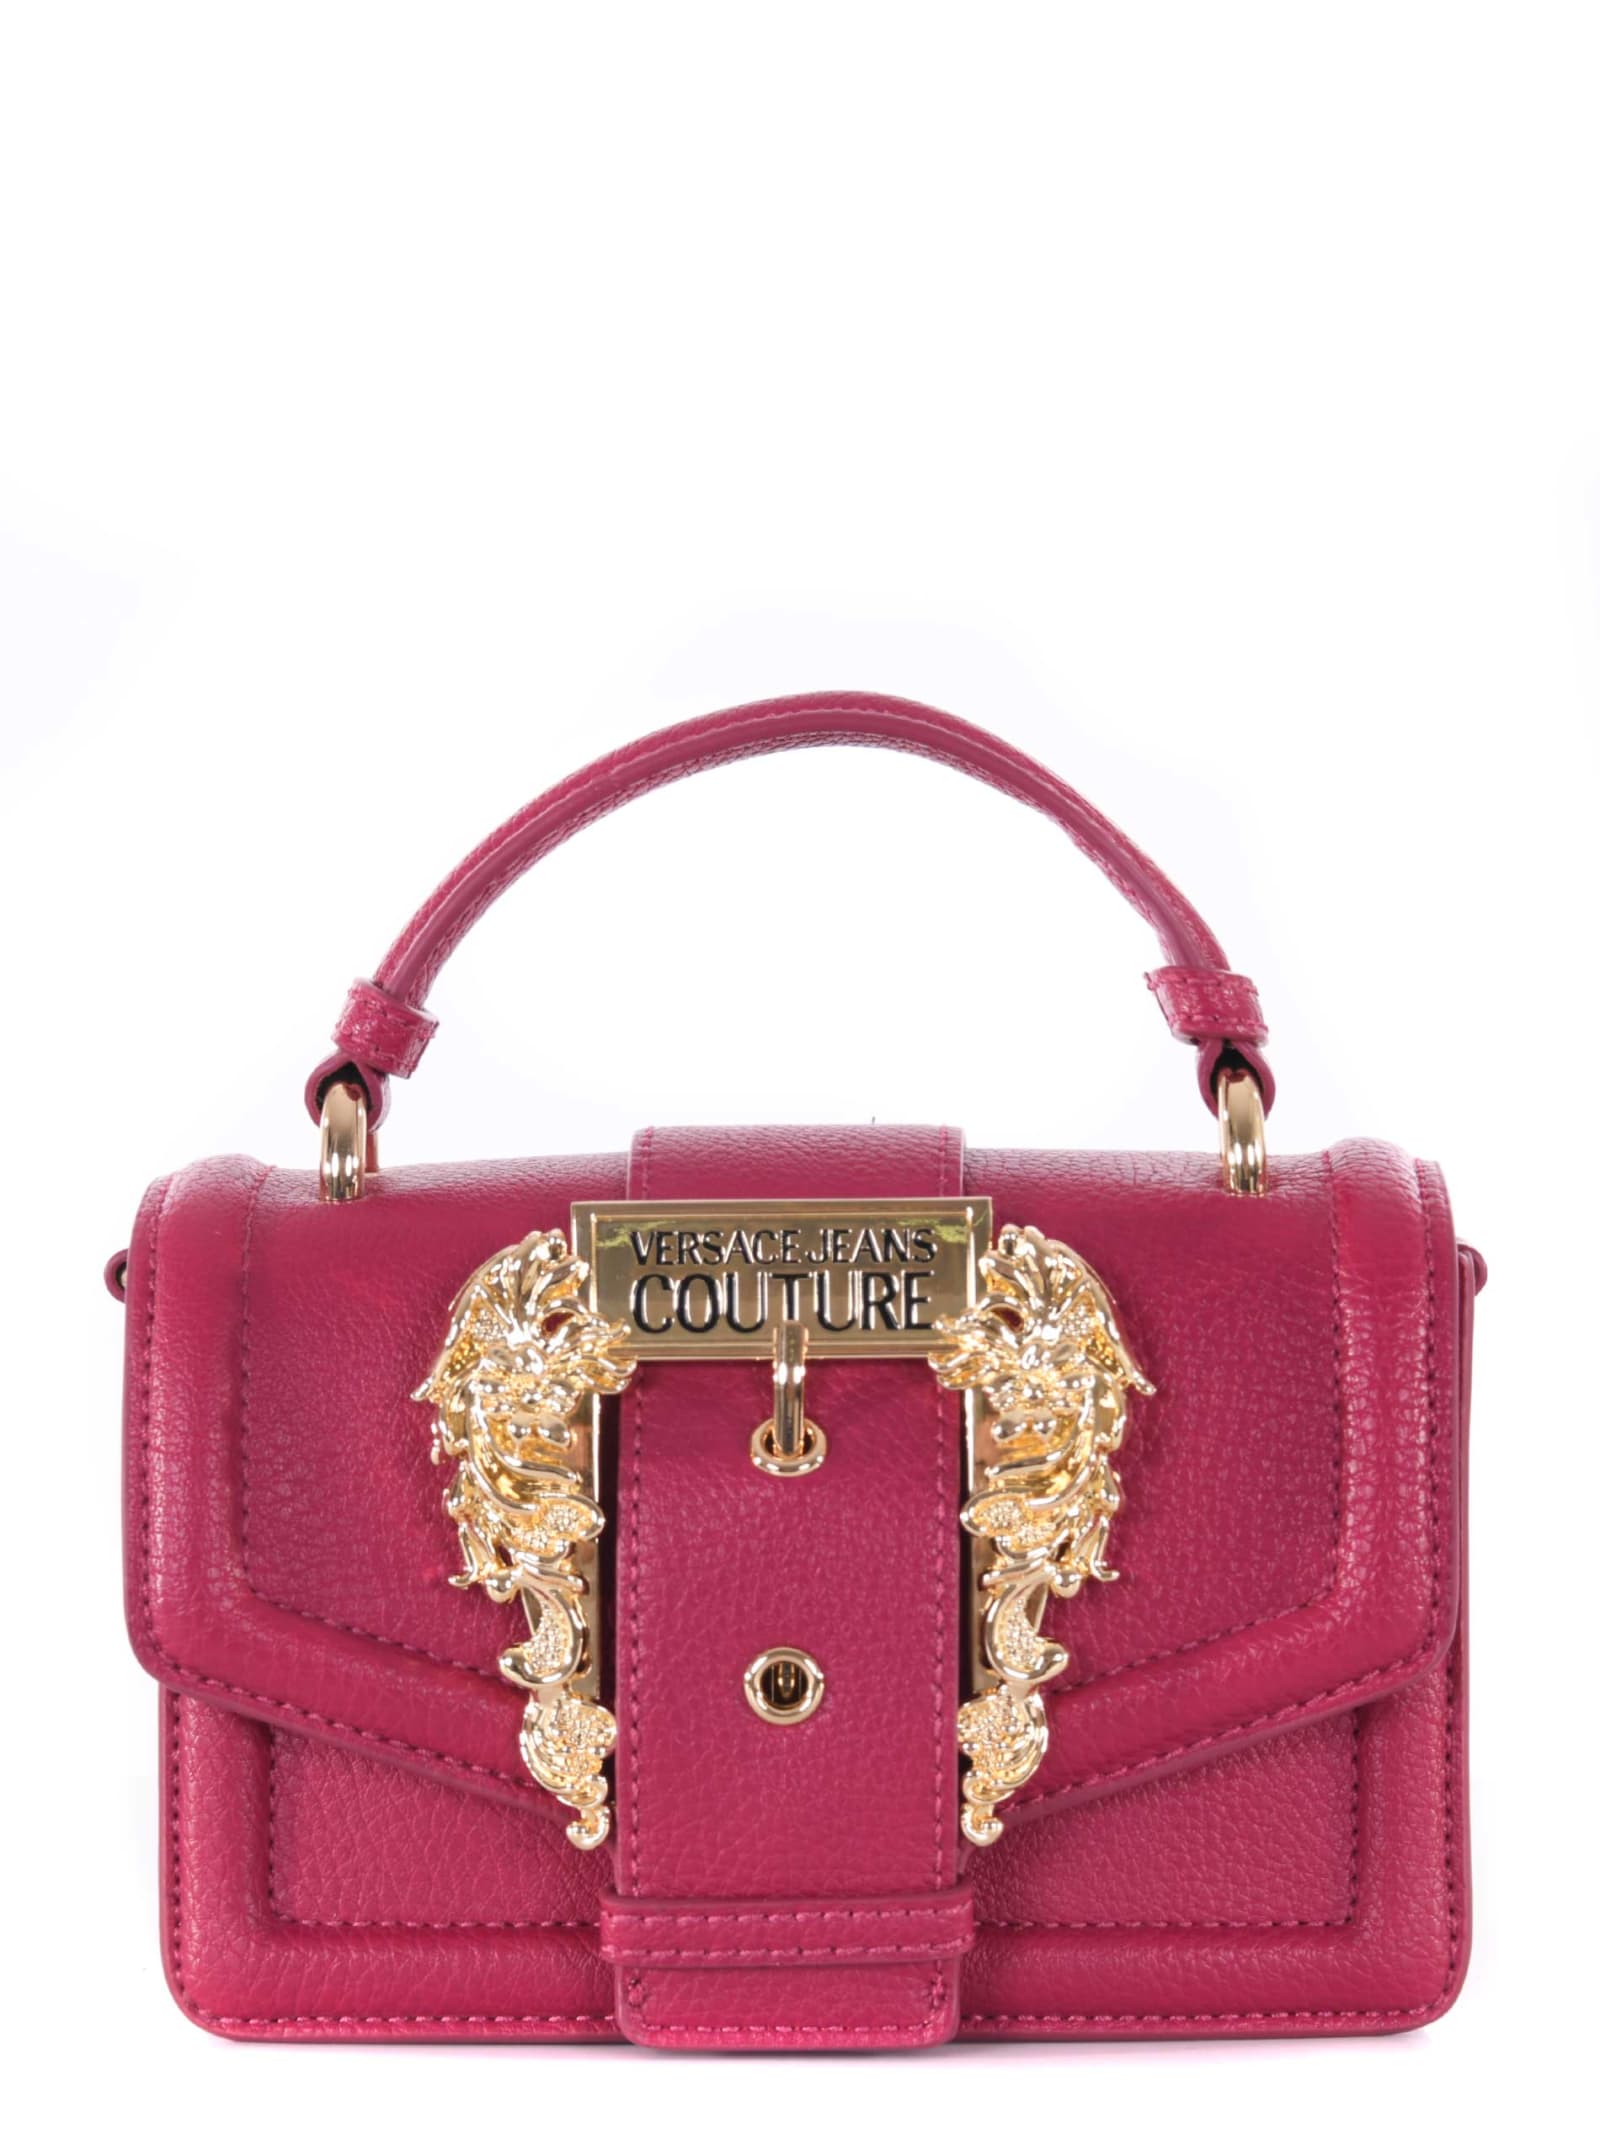 Versace Jeans Couture baroque Handbag